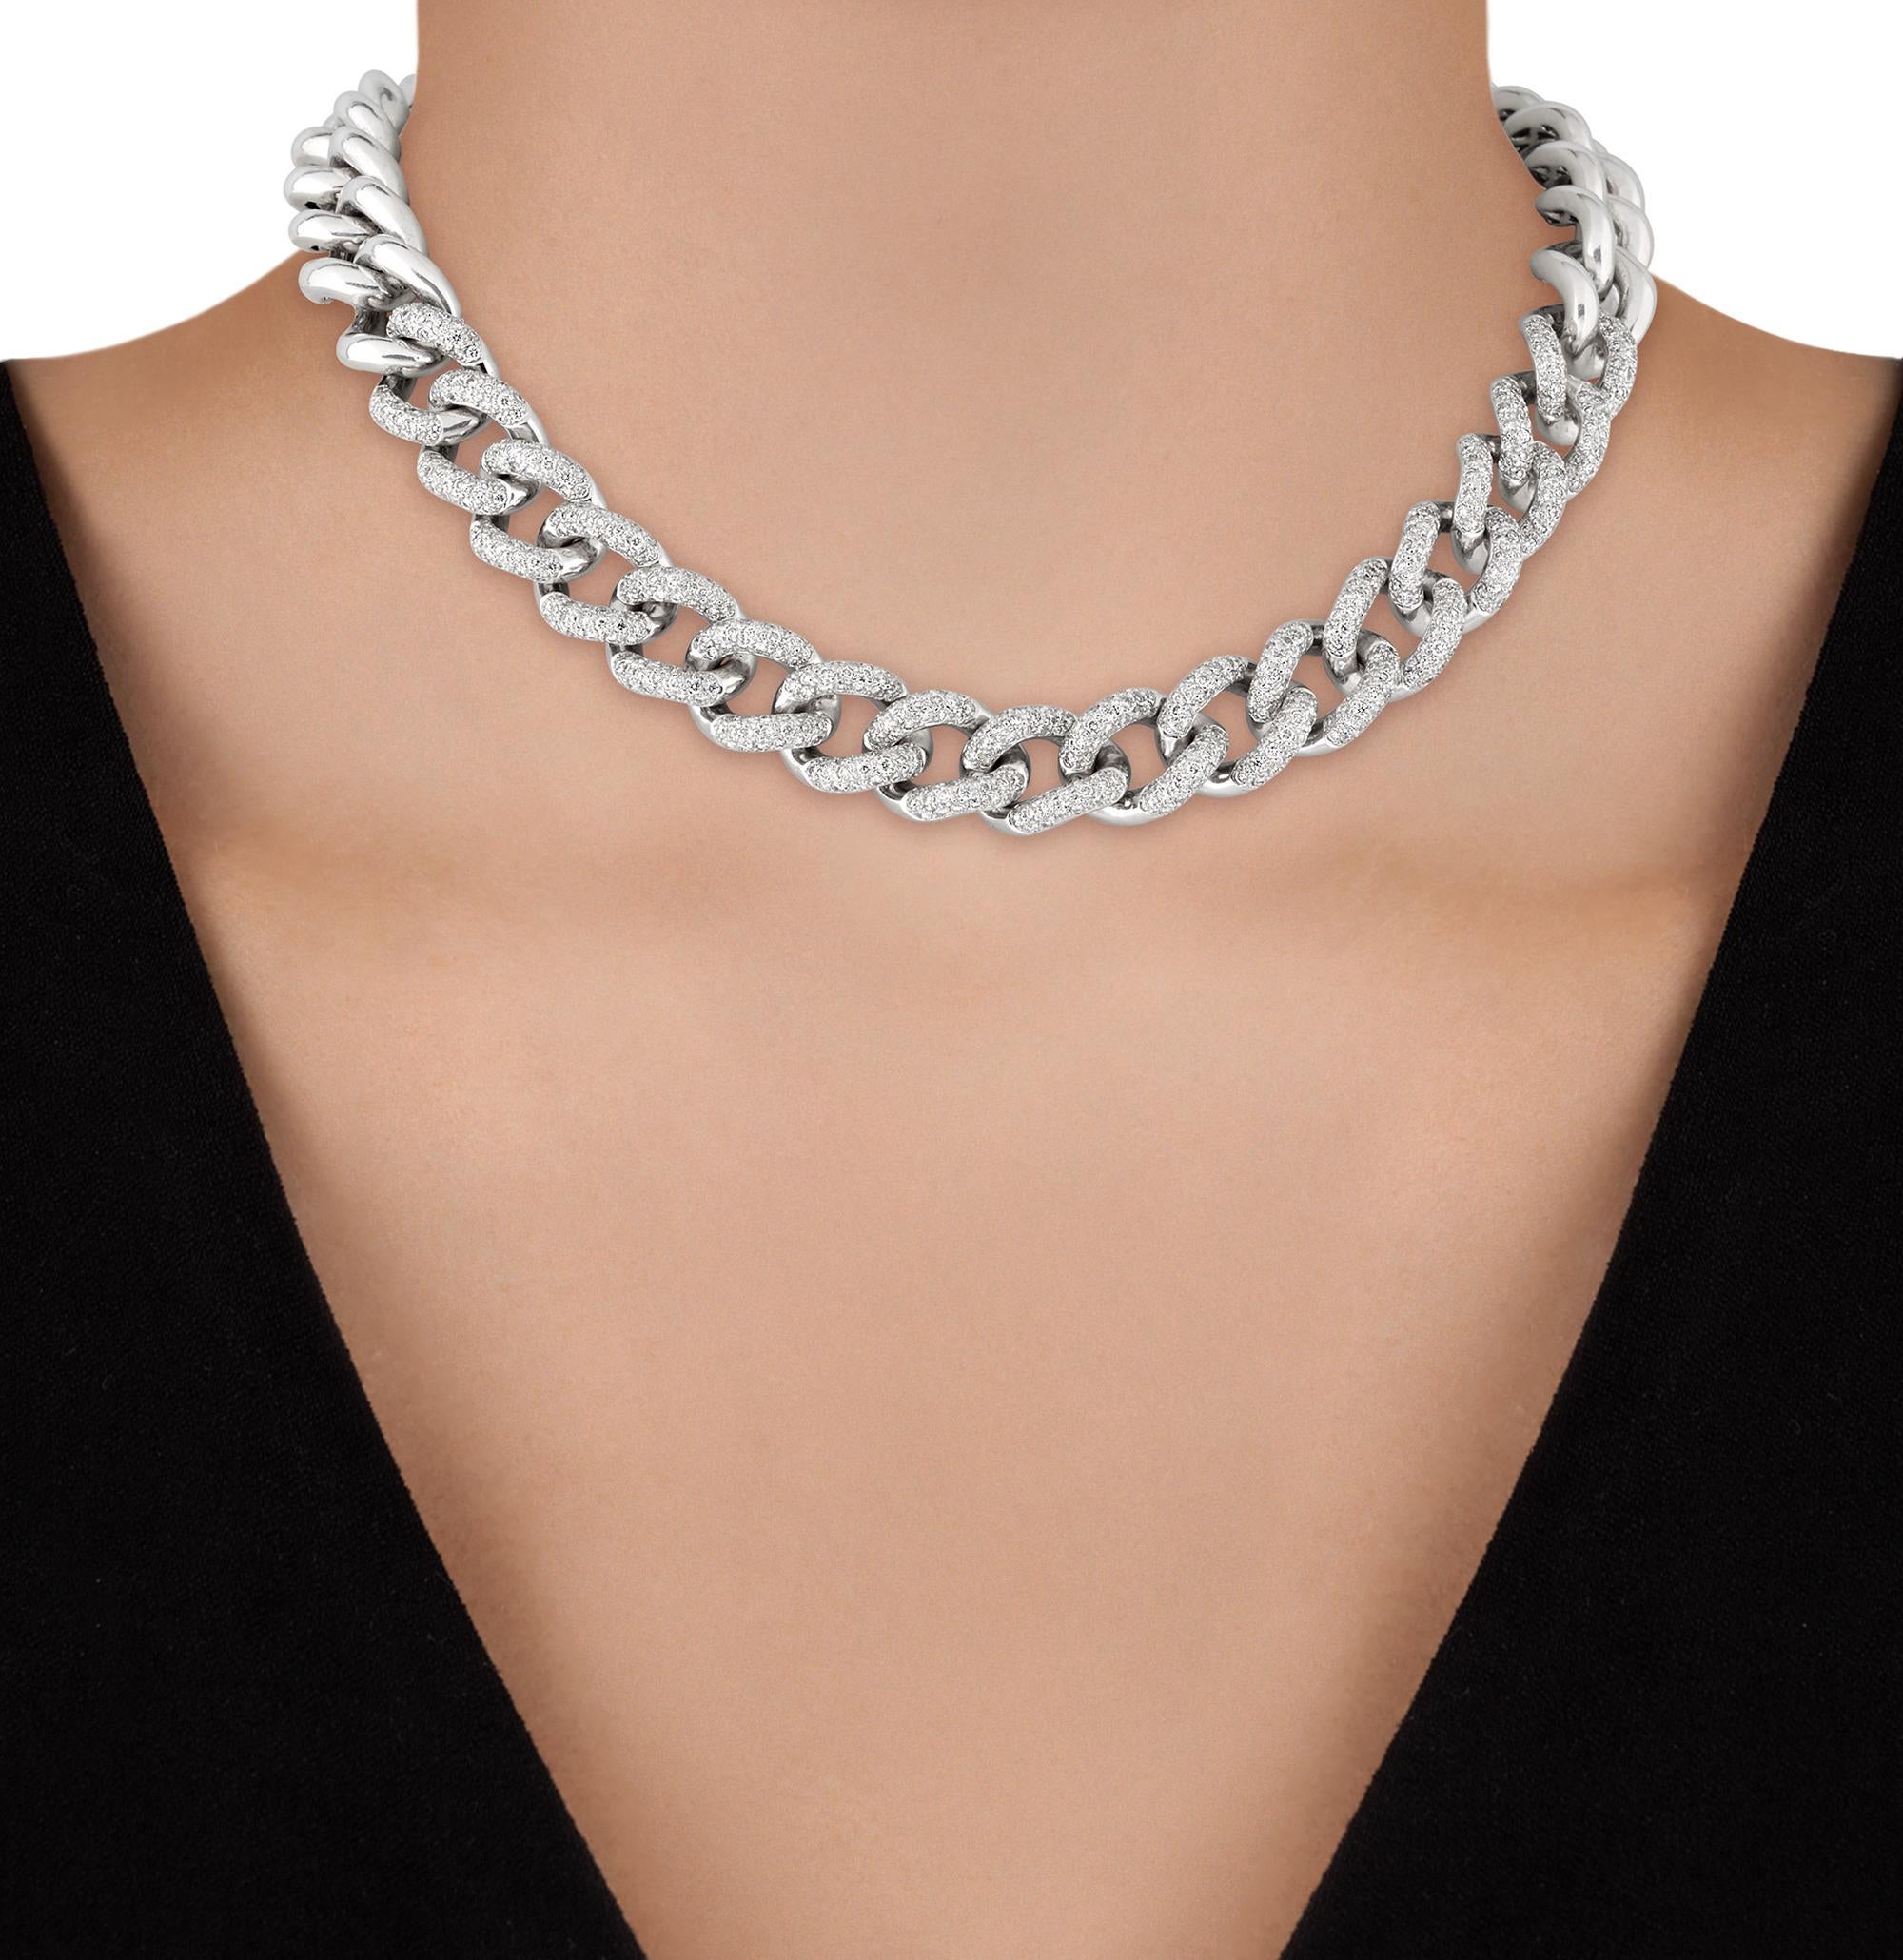 Brilliant Cut White Gold Chain Necklace With Pavé Diamonds, 3.95 Carats